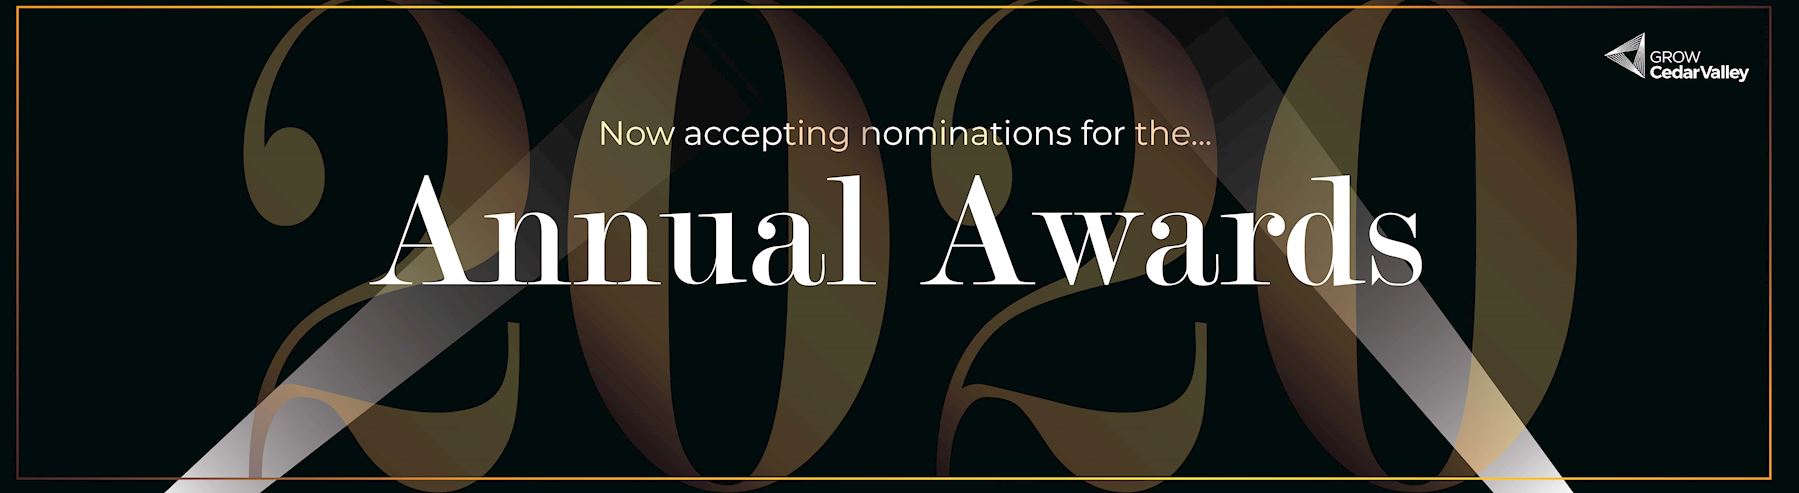 Nomination open for the 2020 Grow Cedar Valley Annual Awards